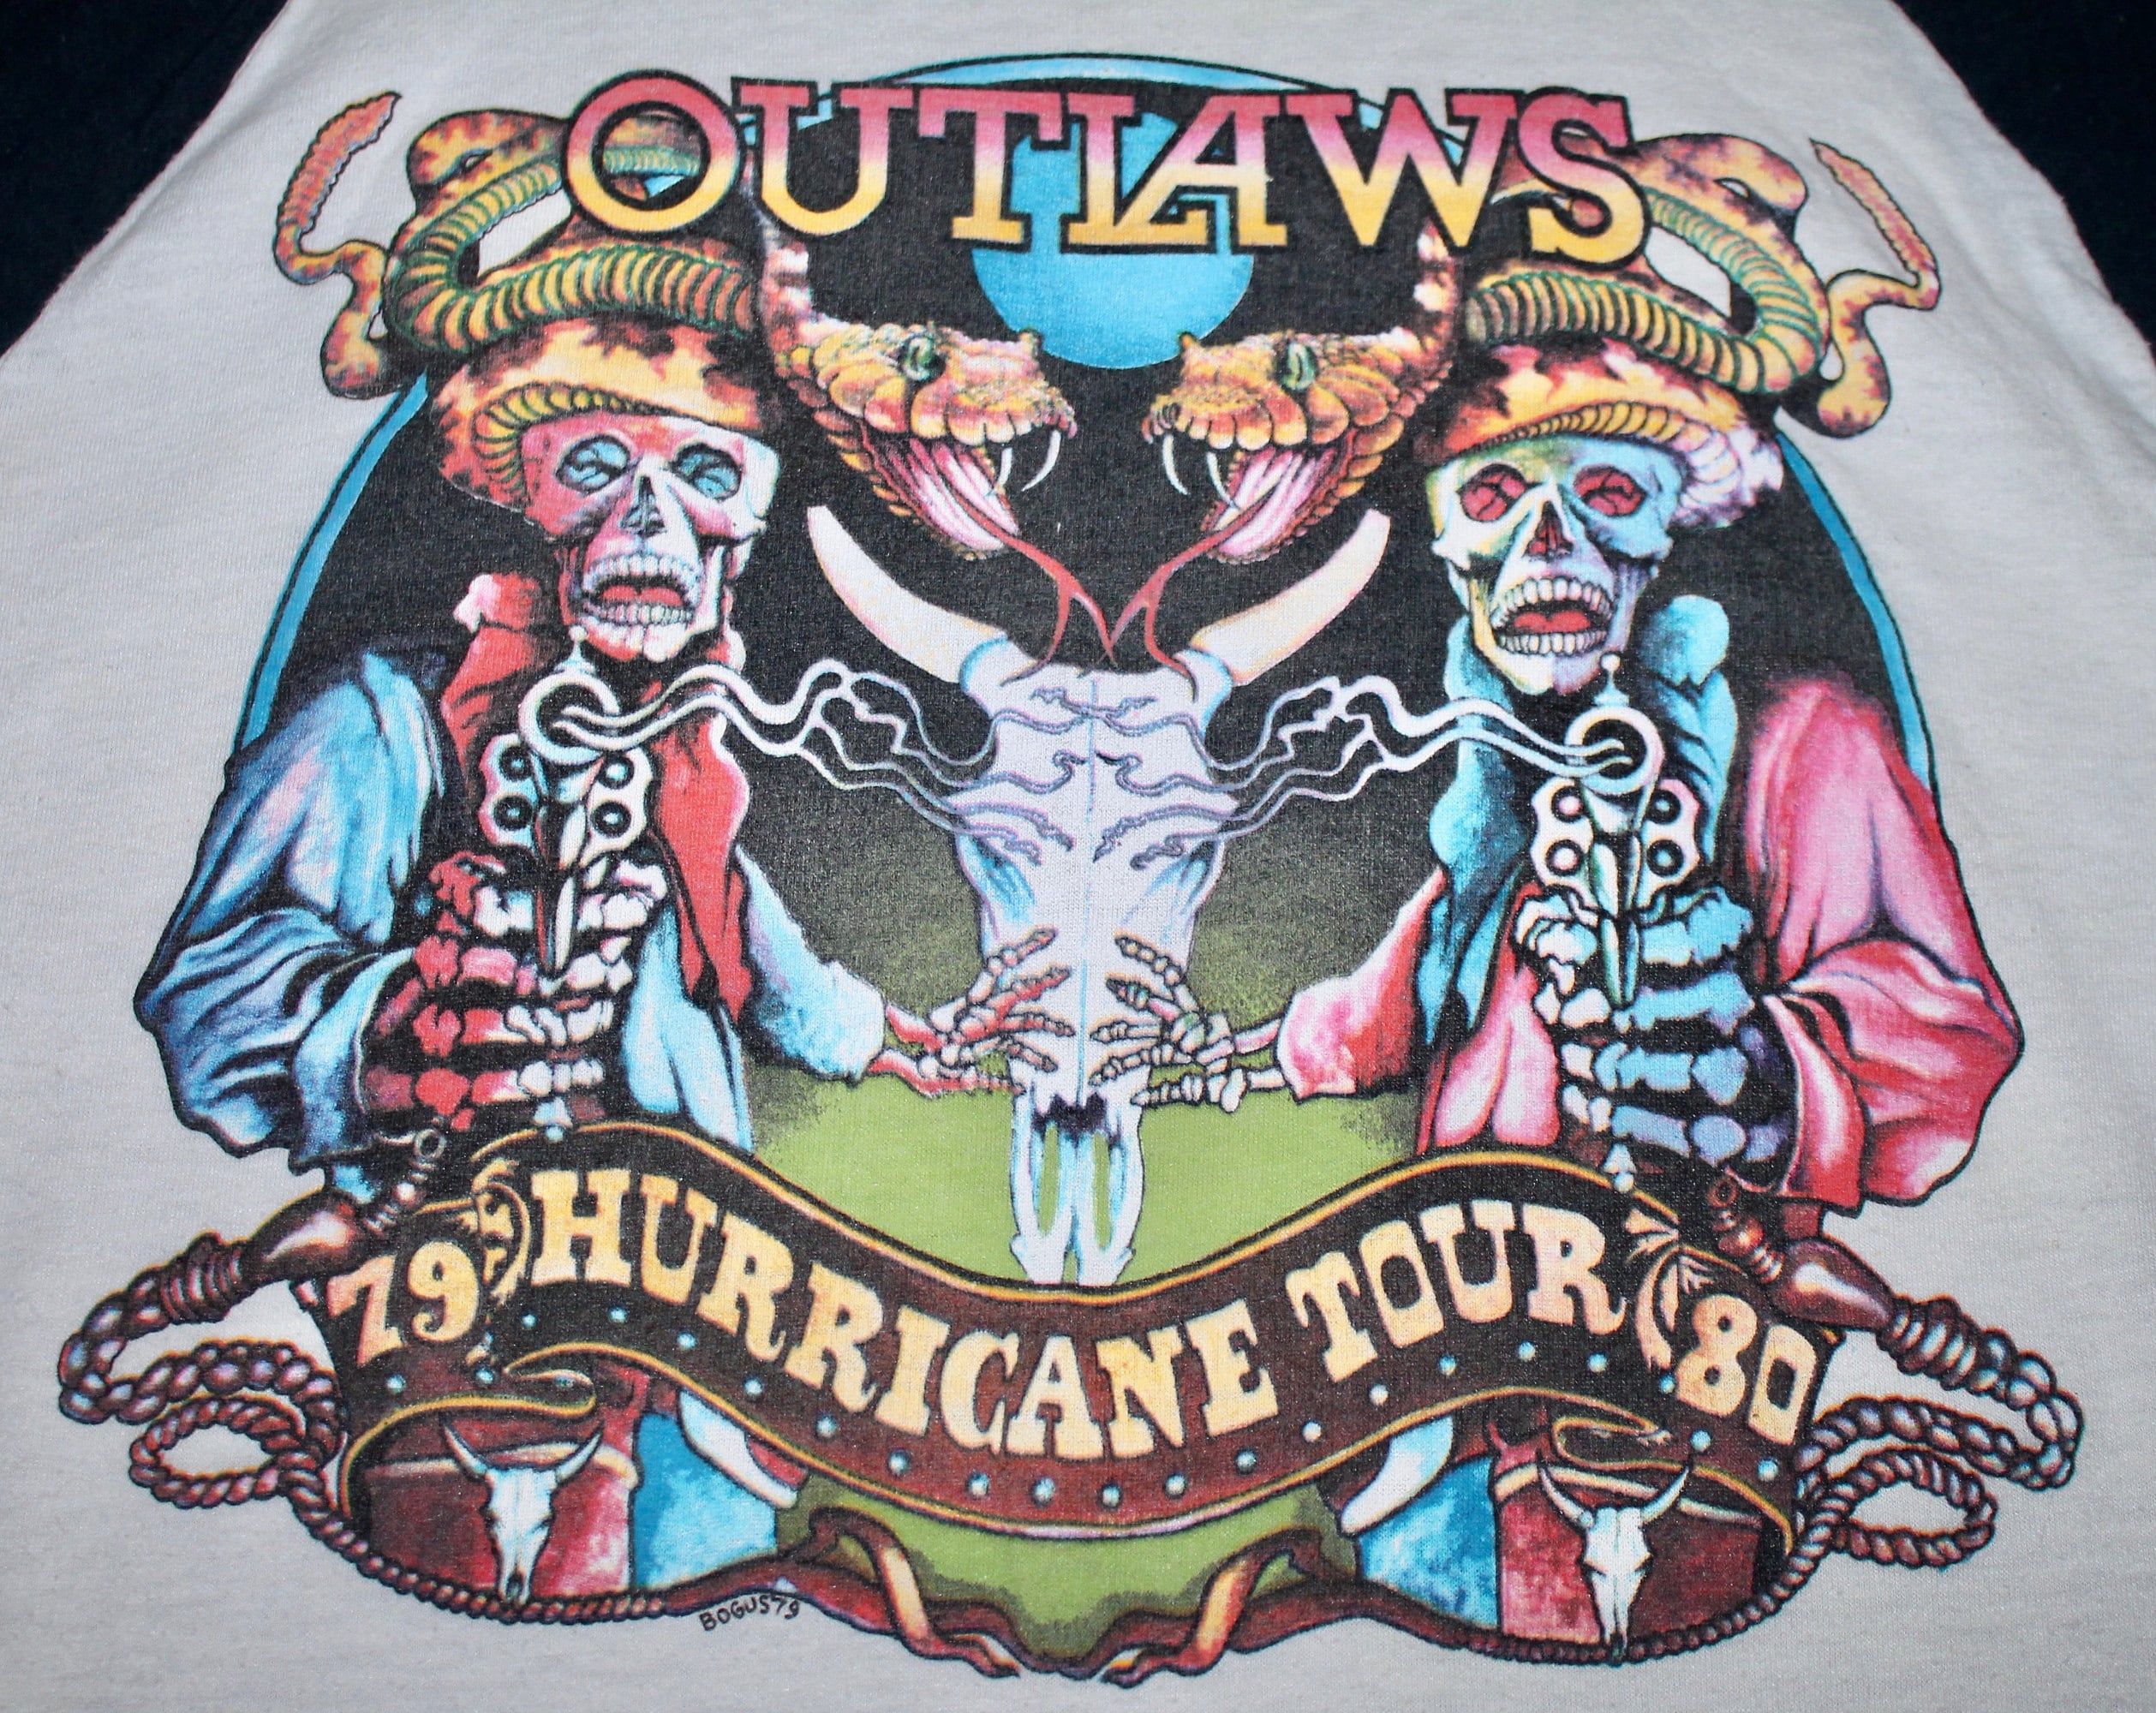 S * vtg 70s 1979 1980 The Outlaws concert tour raglan t shirt * 100.25